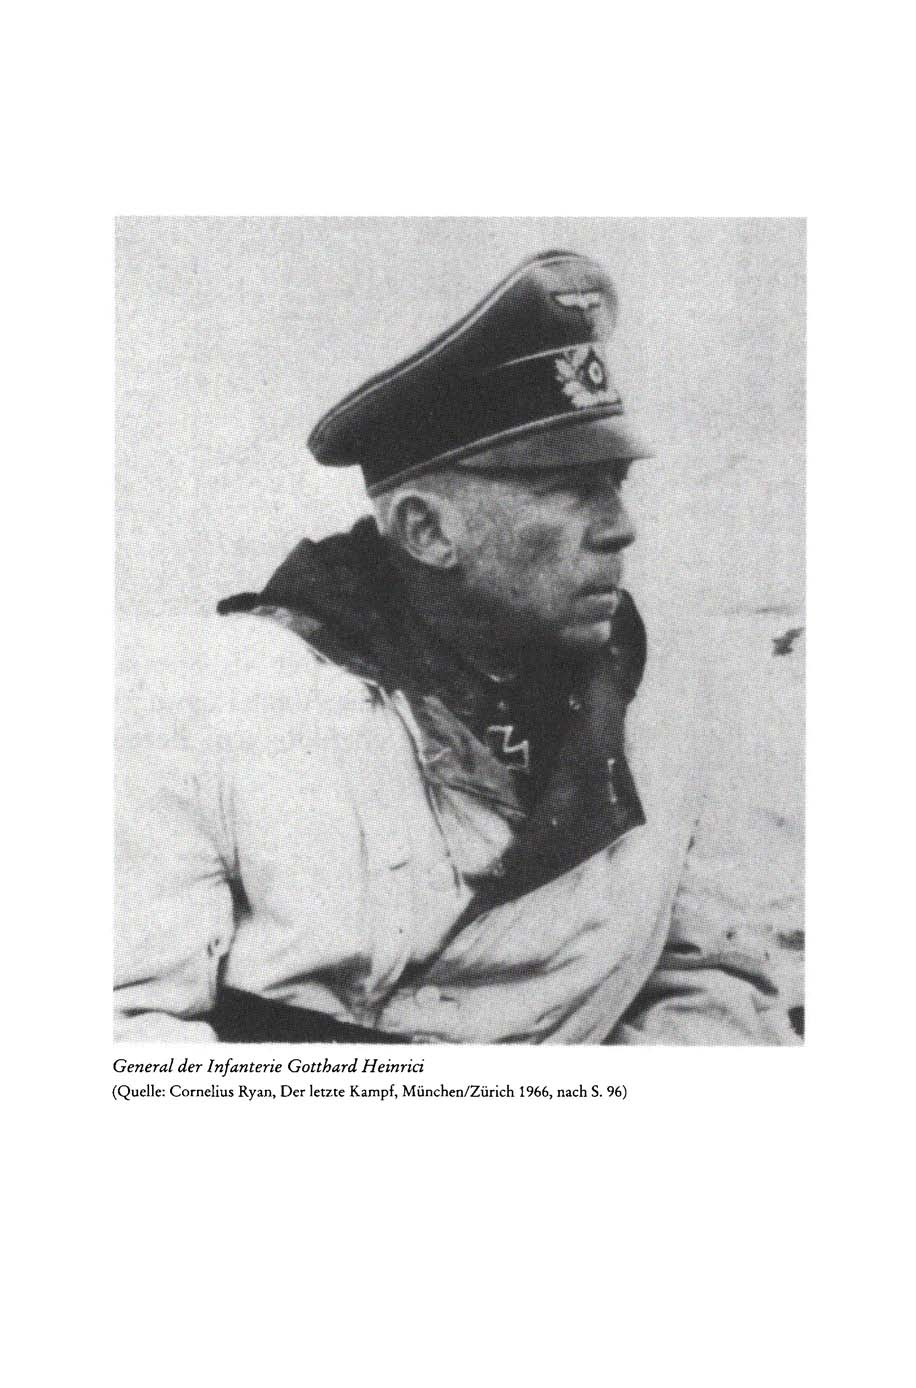 General der Infanterie Gotthard Heinrici (Quelle: